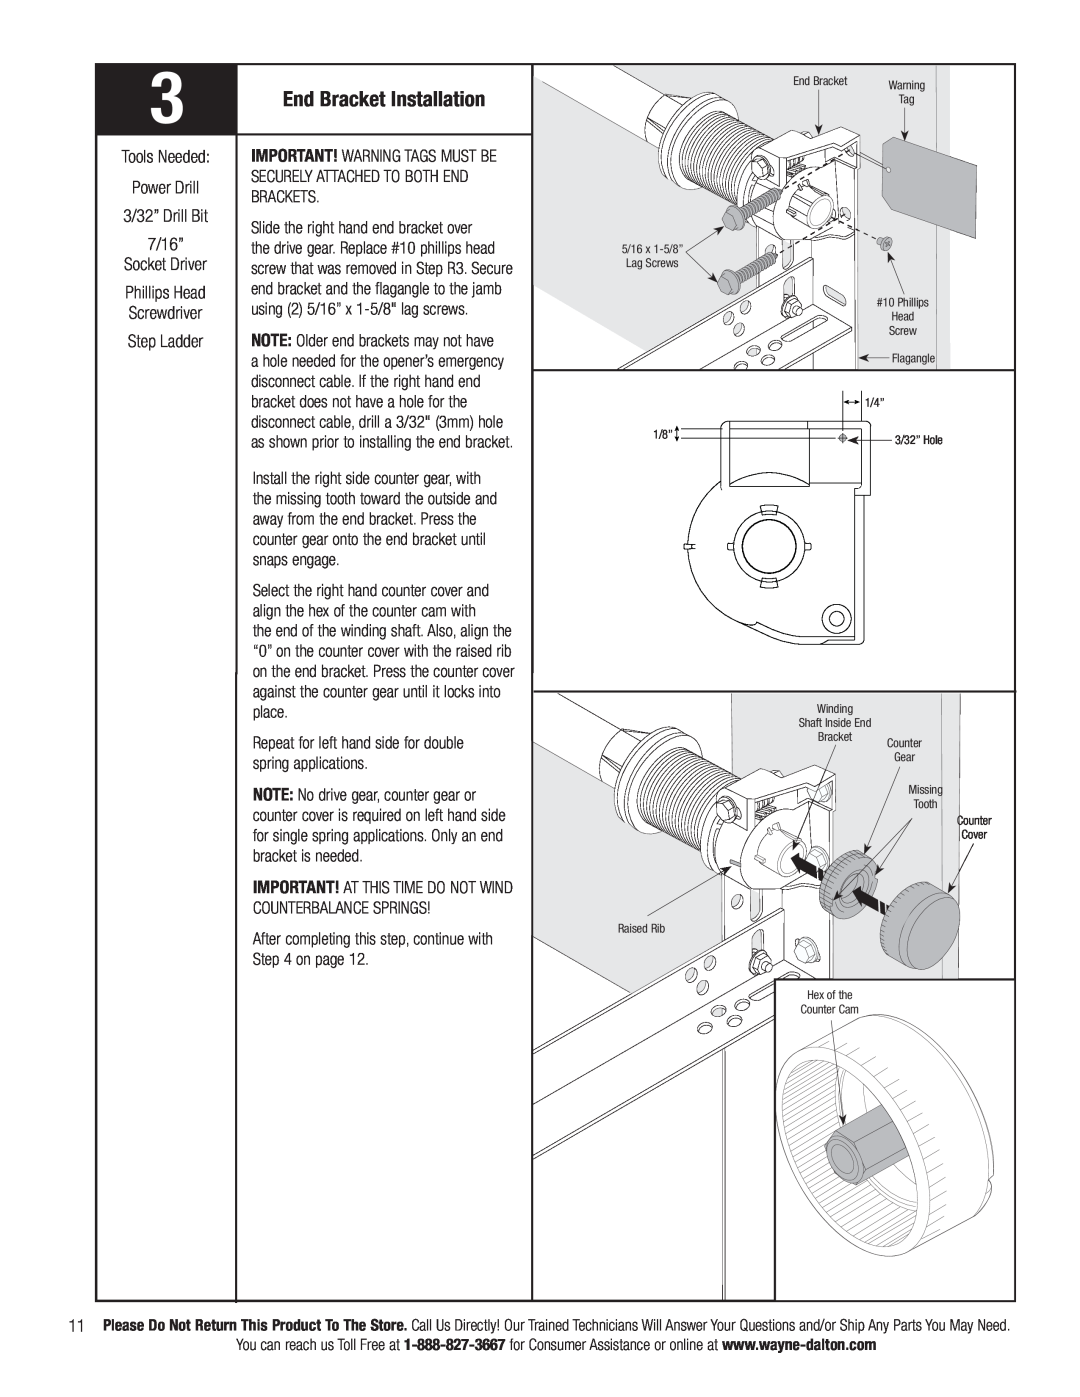 Wayne-Dalton 3663-372 installation instructions Slide the right hand end bracket over, using 2 5/16” x 1-5/8lag screws 